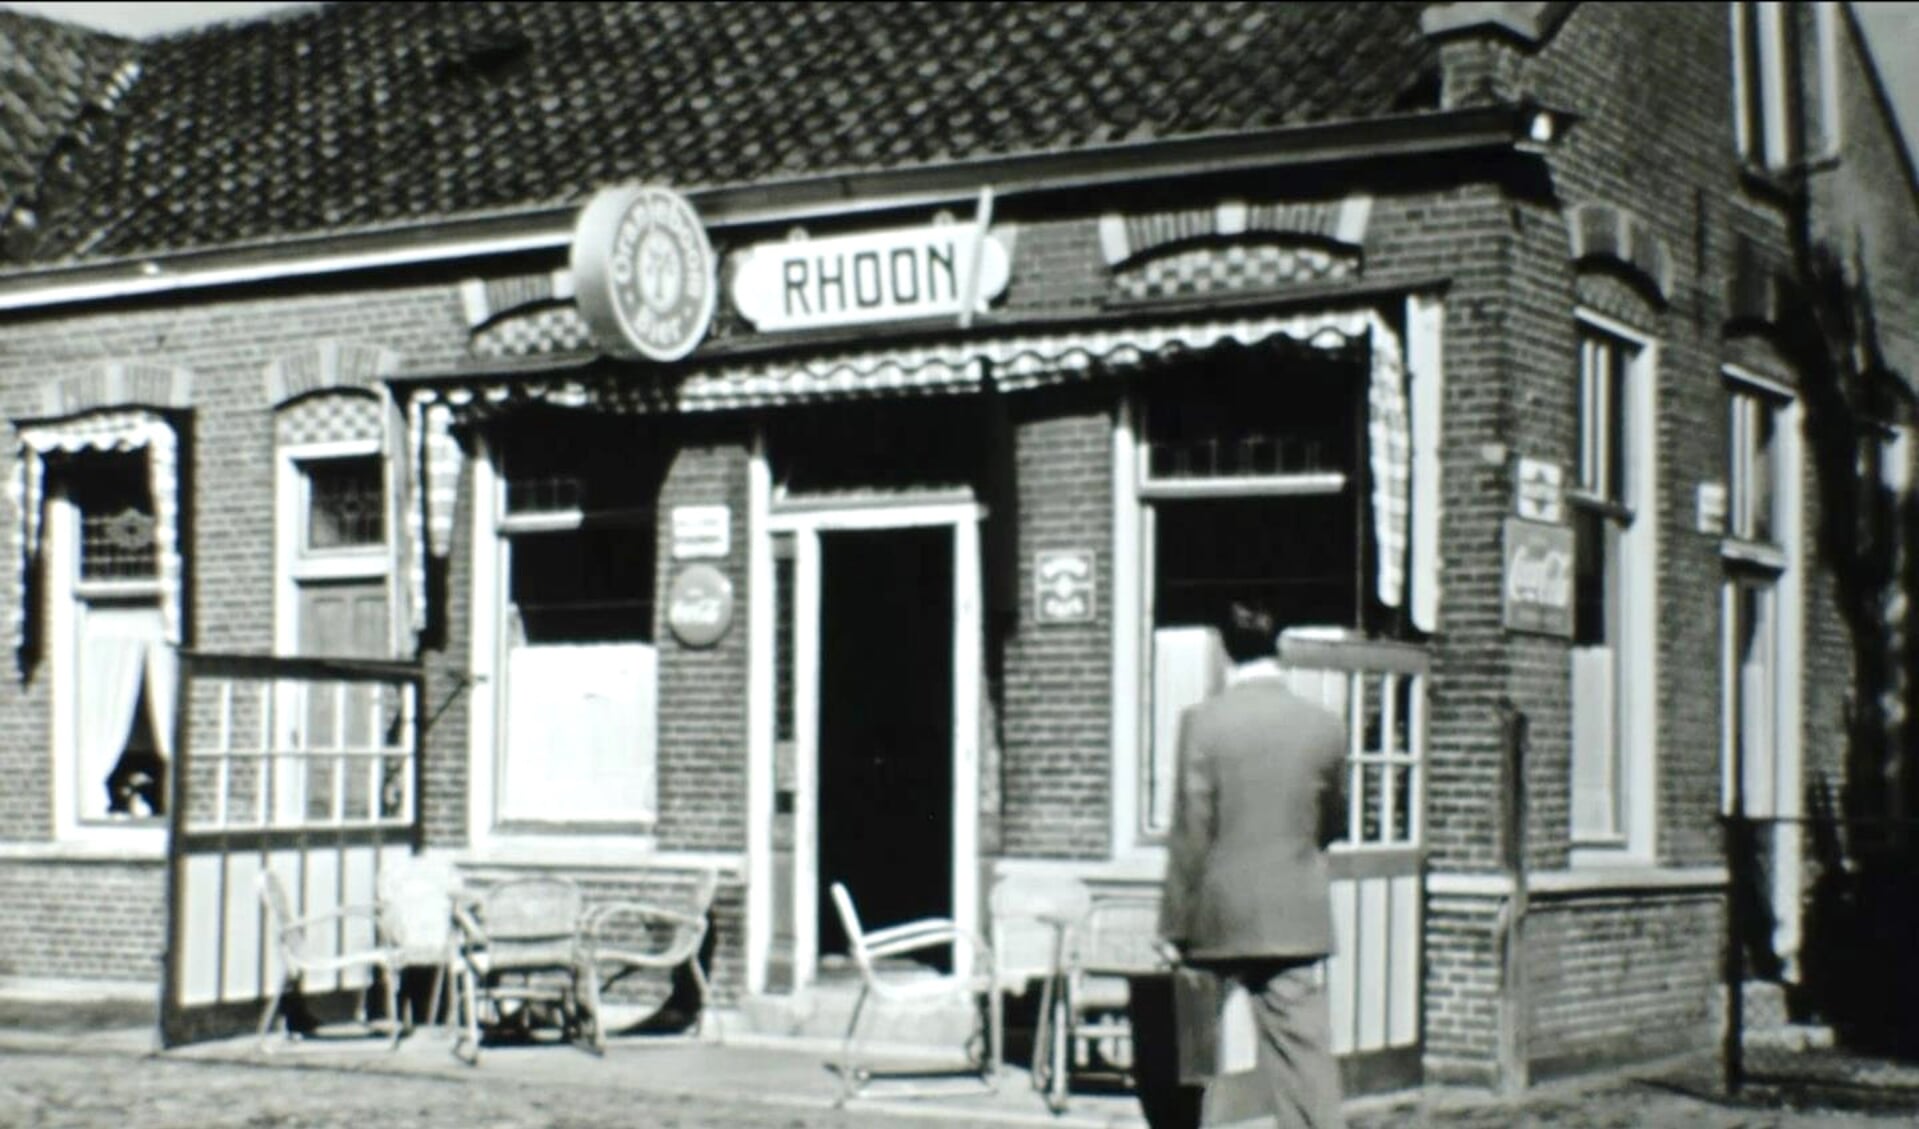 Station Rhoon is te zien in de film. 